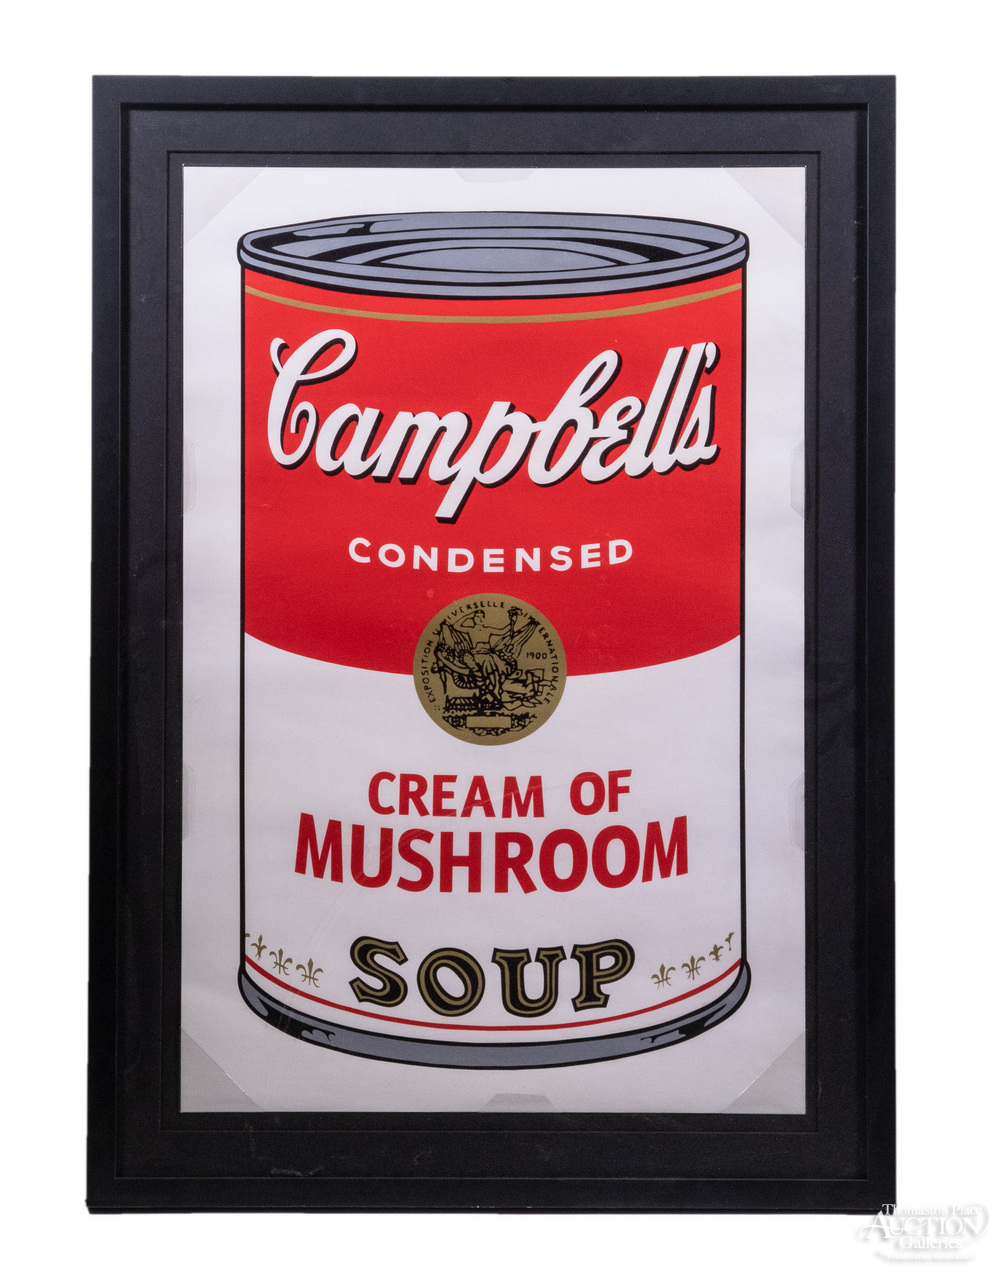 ANDY WARHOL (NY, 1929-1987) "Campbell's